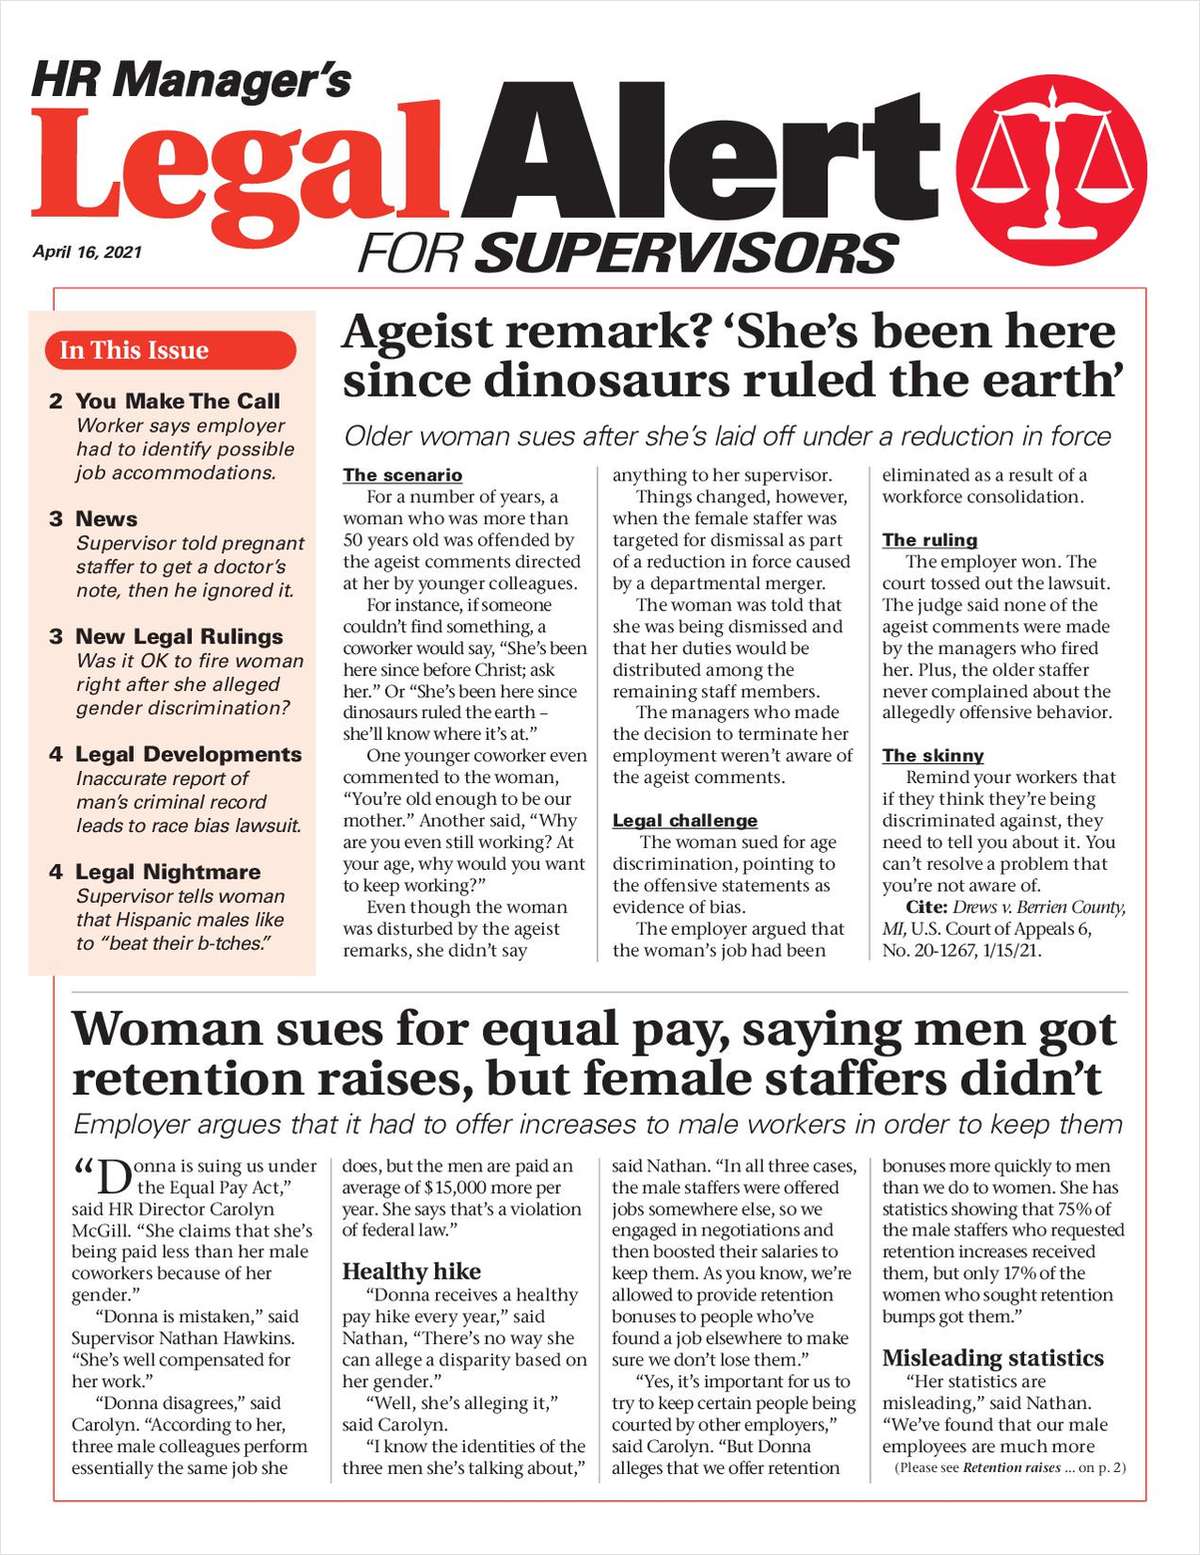 HR Manager's Legal Alert for Supervisors Newsletter: April 16 Edition